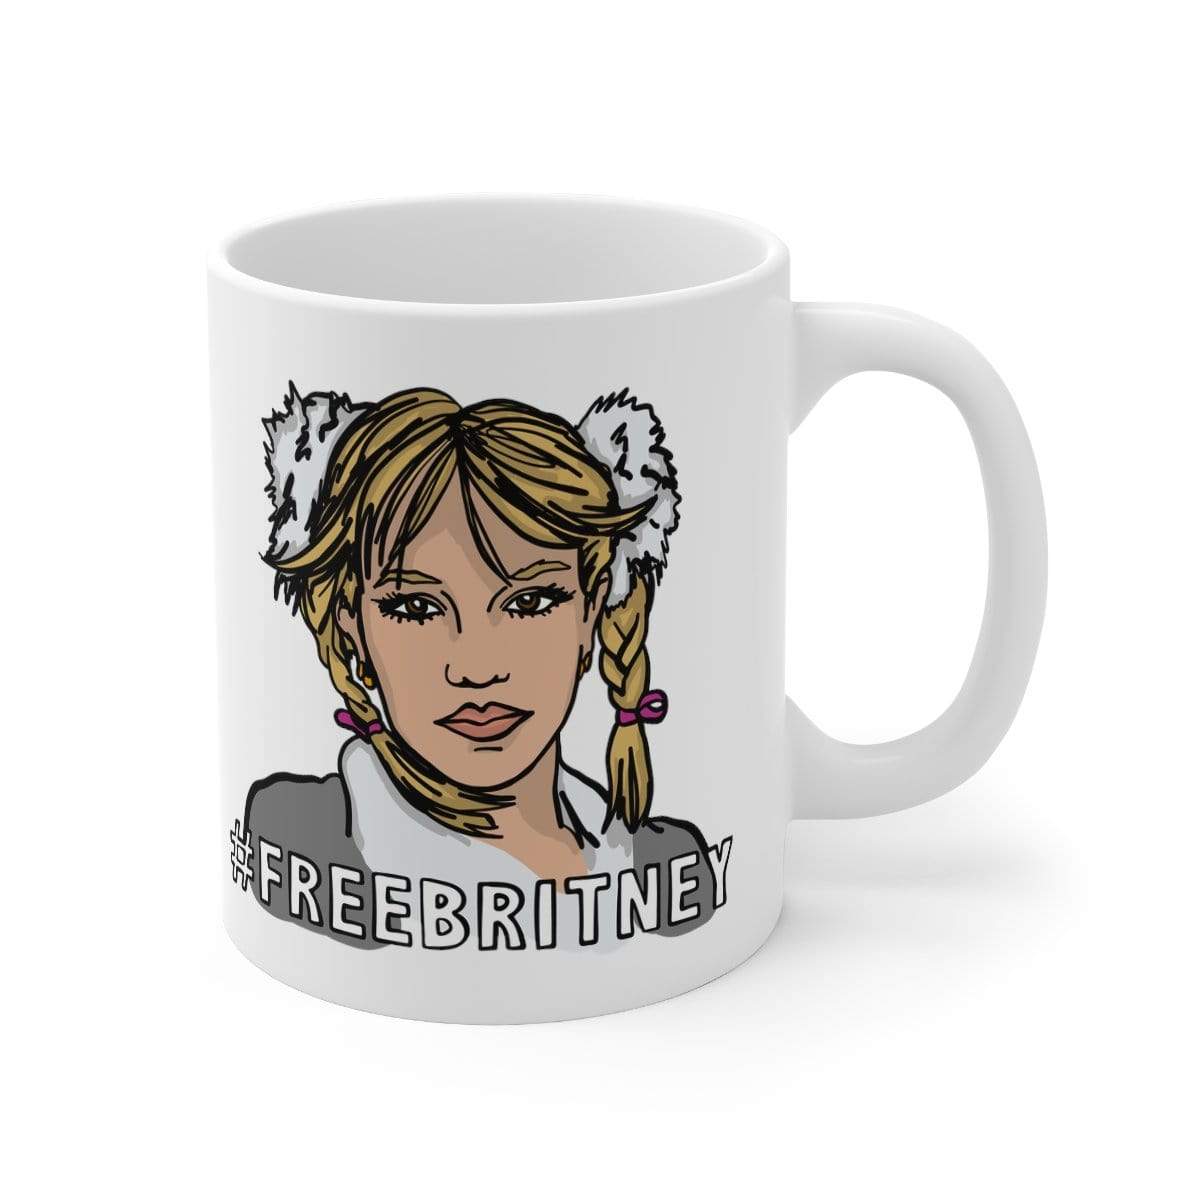 Free Britney 🎤 - Coffee Mug